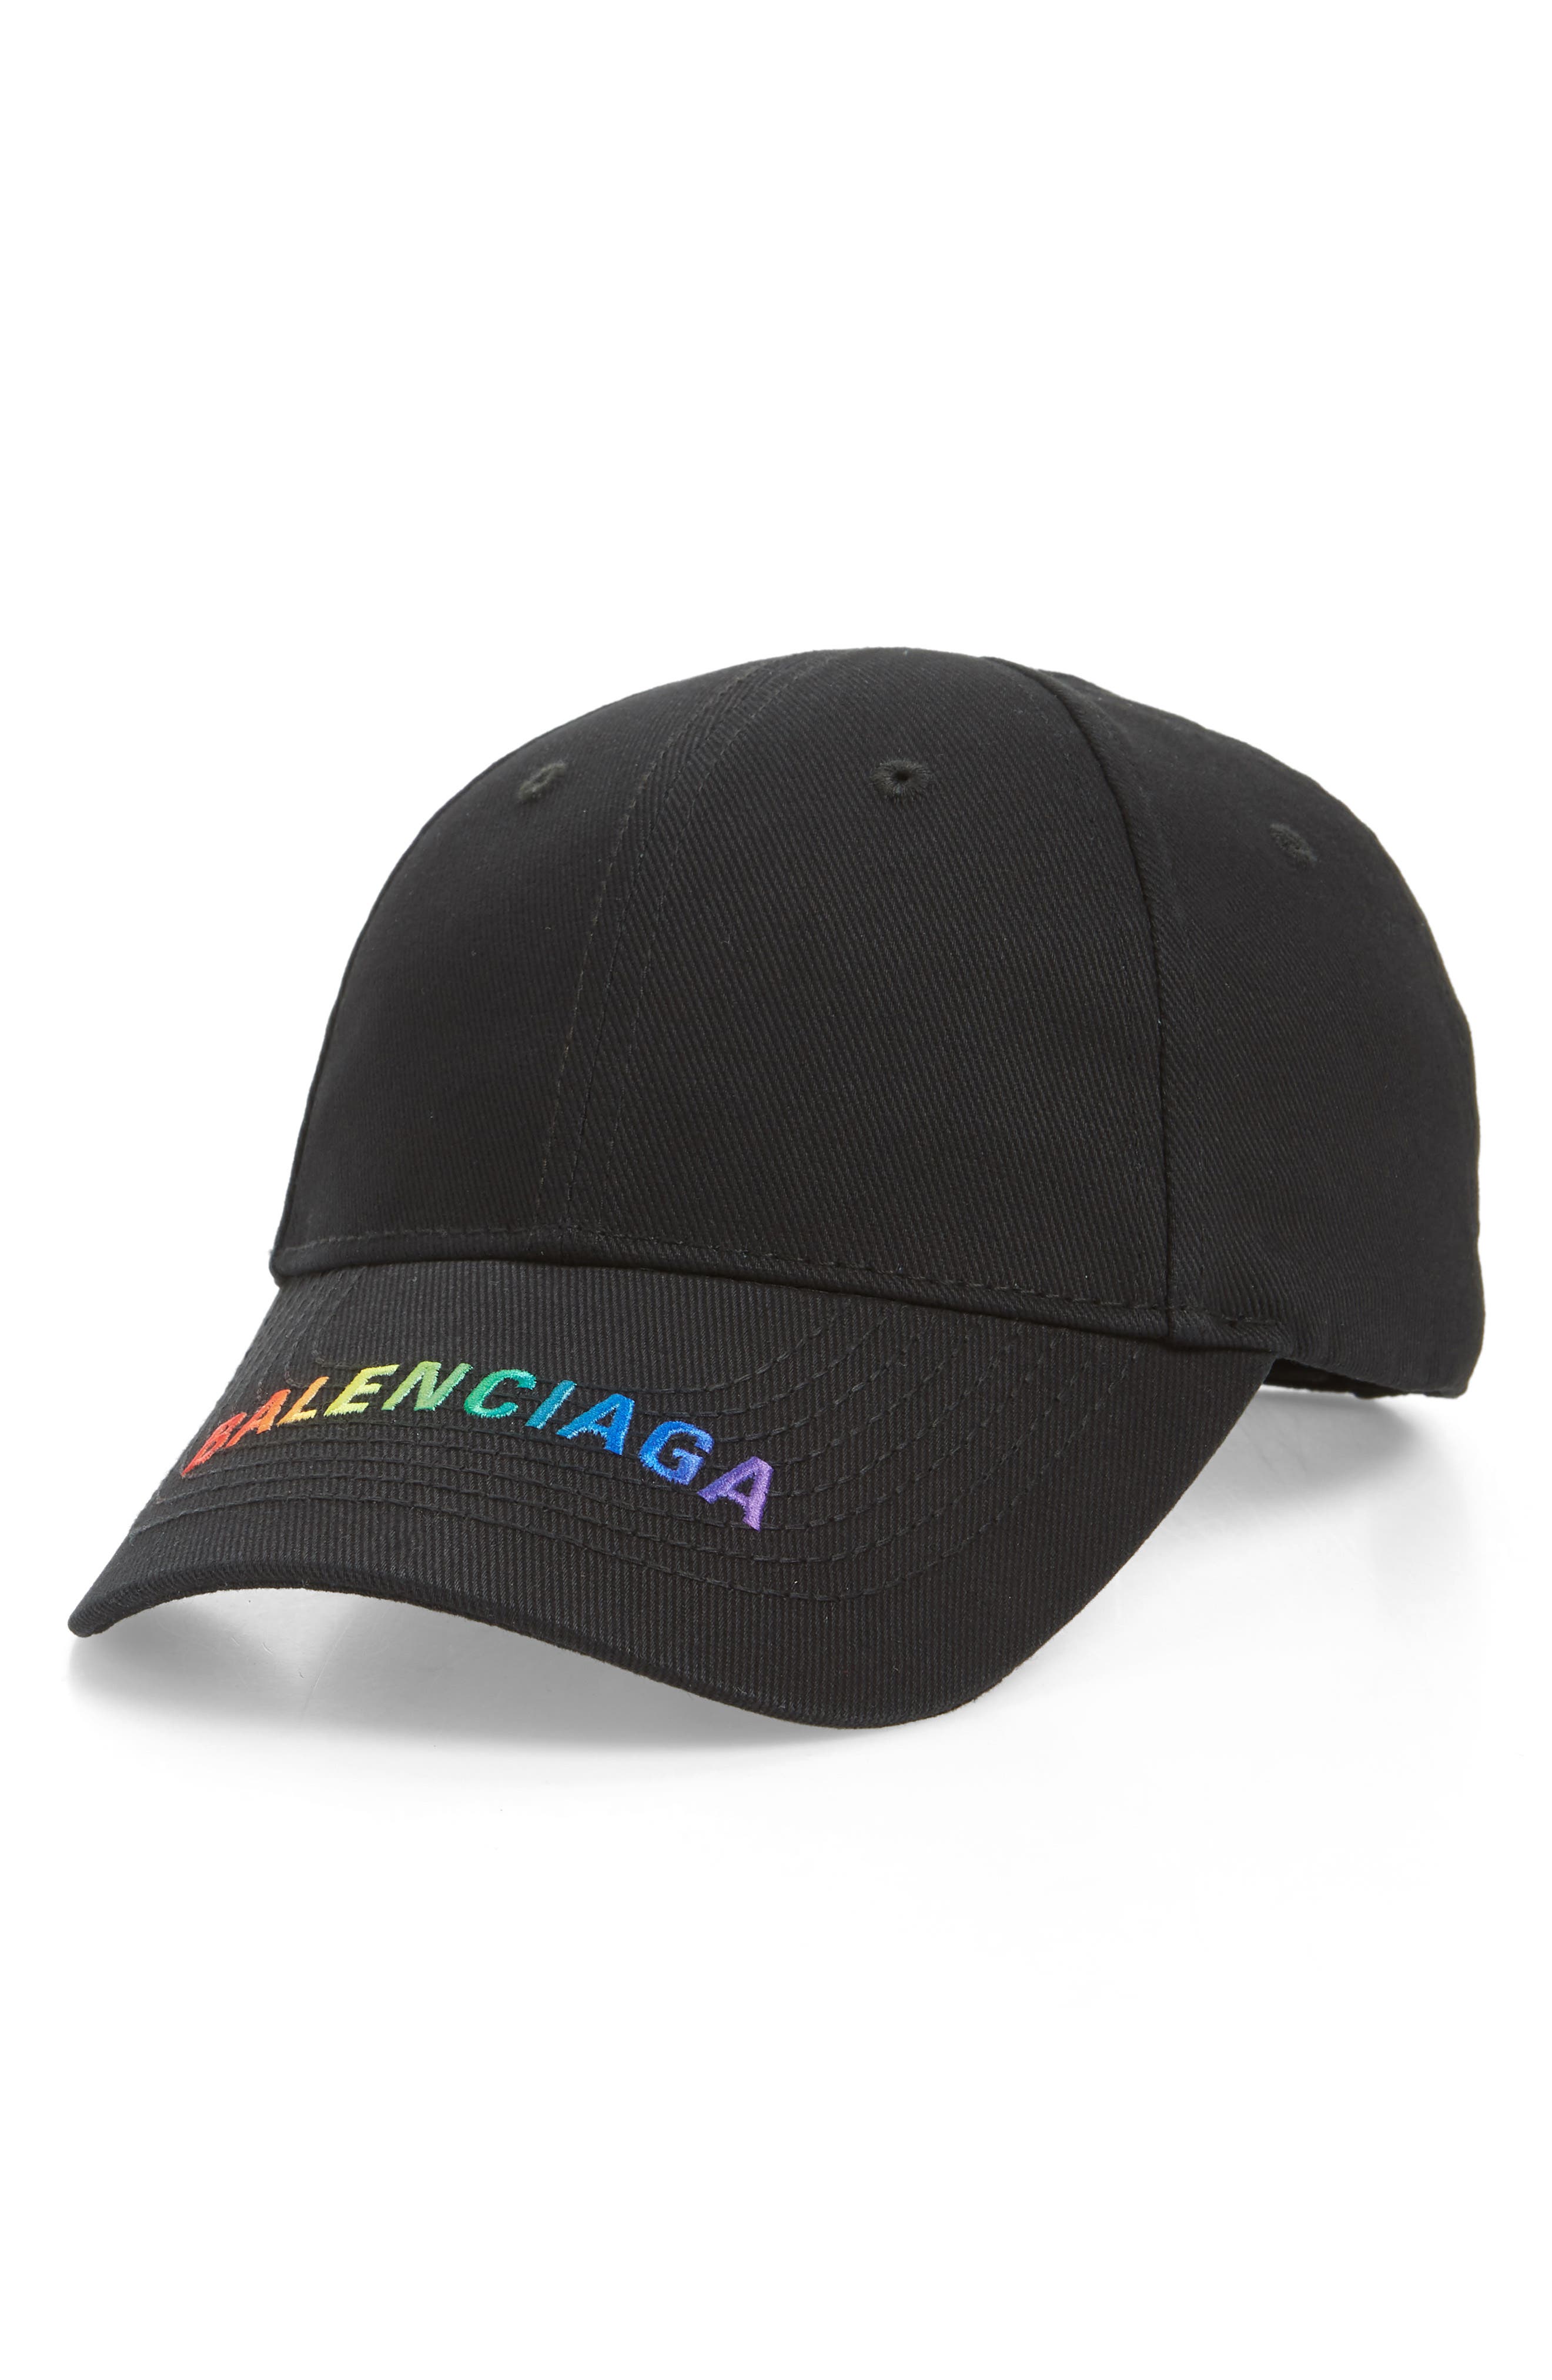 balenciaga hat on sale